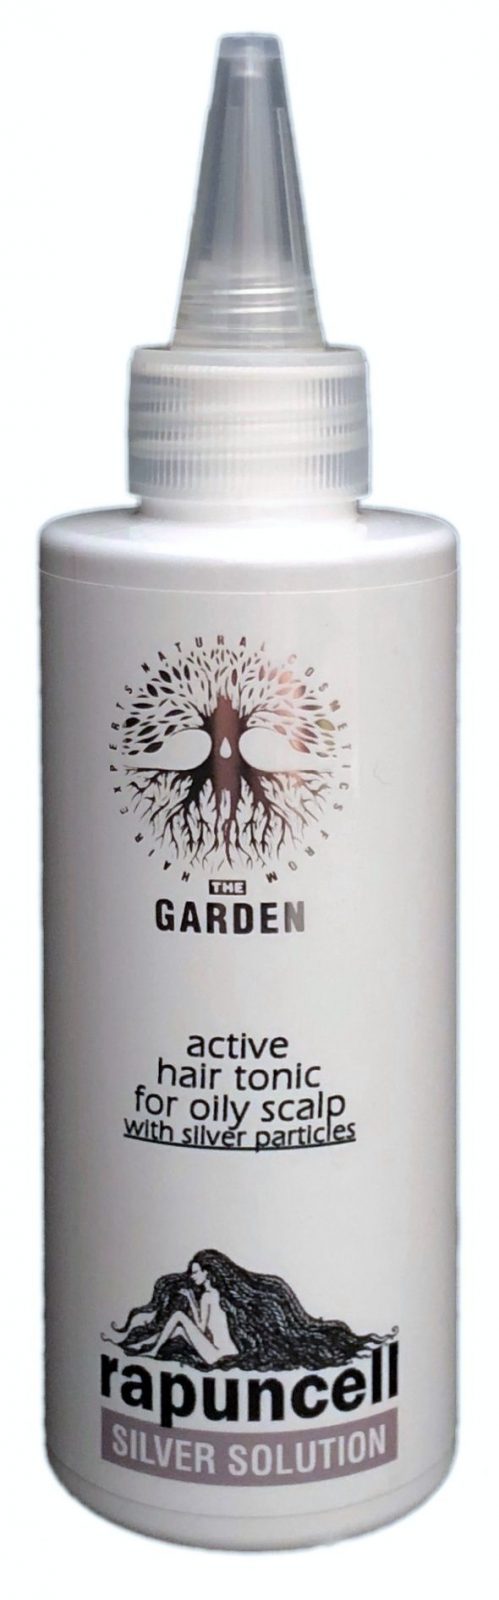 The GARDEN - Rapuncell Silver Solution prirodna vlasova kozmetika